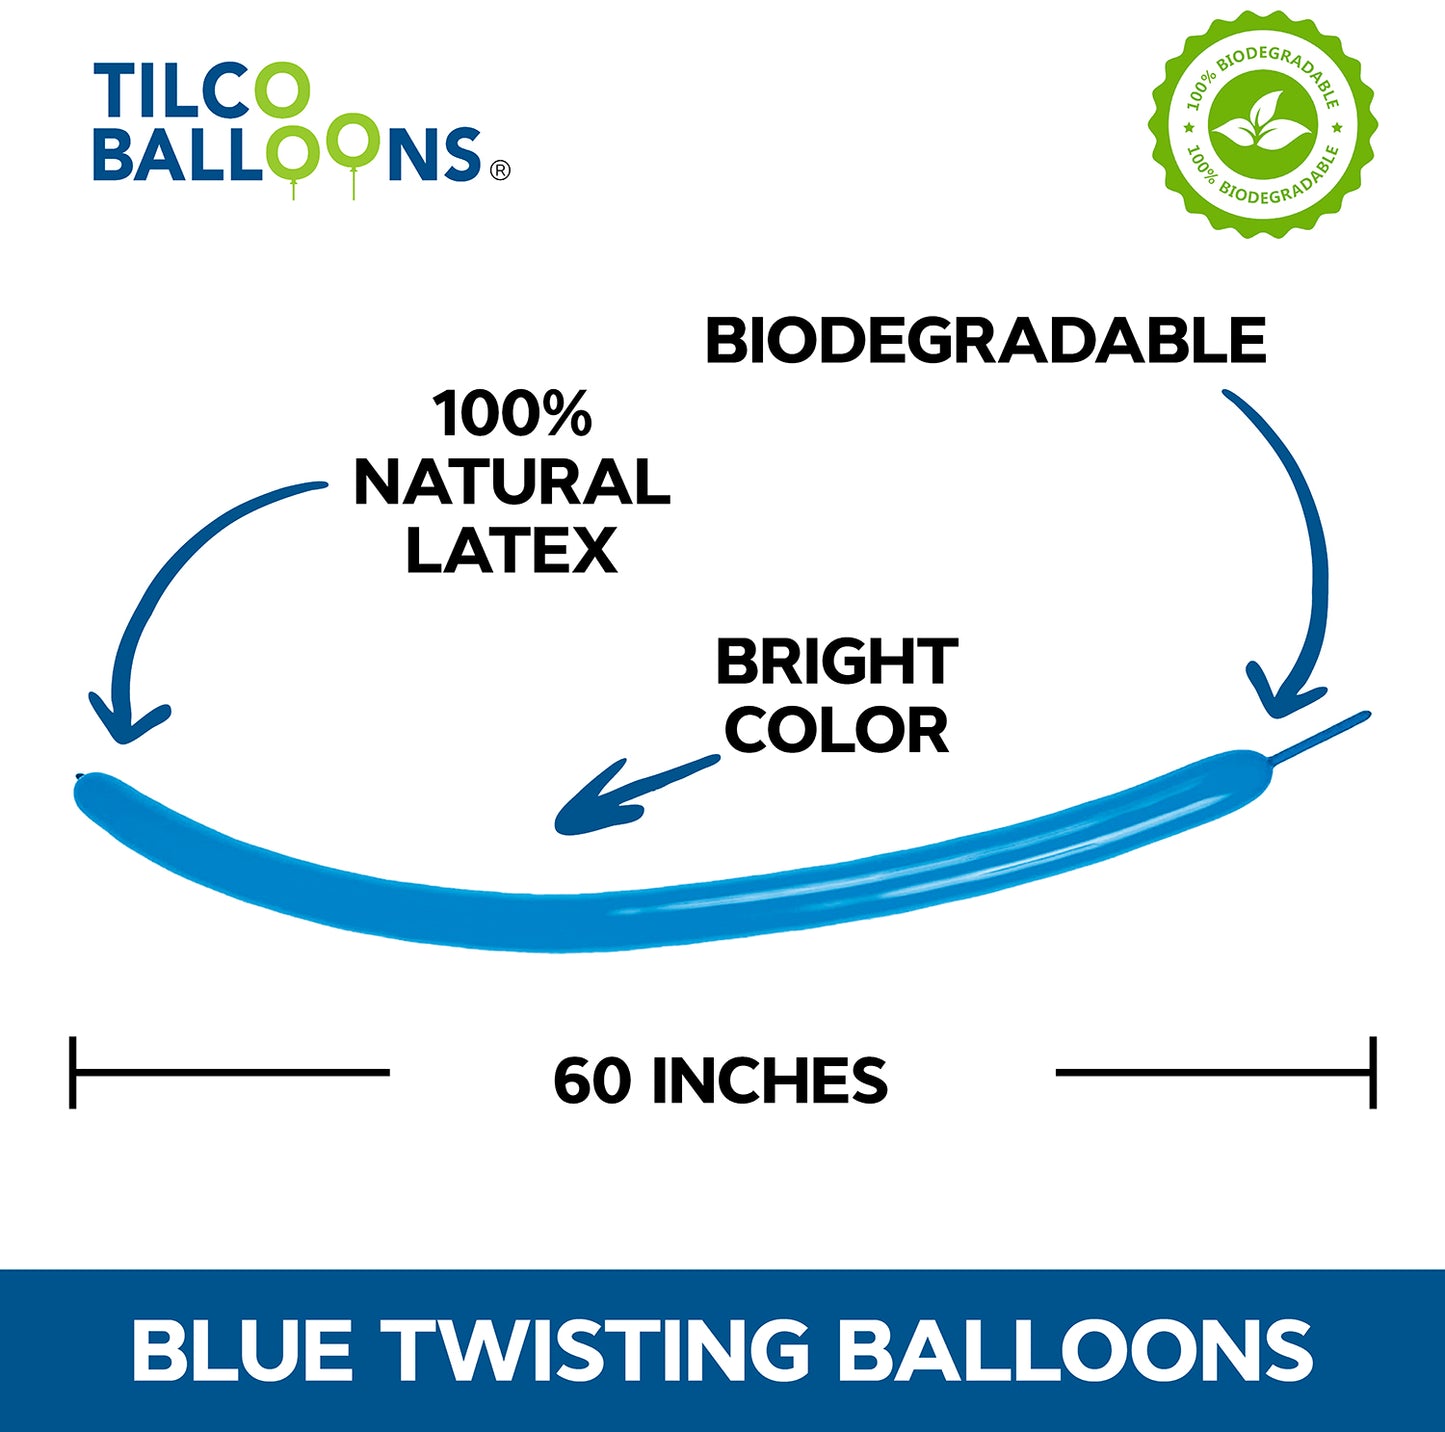 260 Royal Blue Twisting Balloon Description